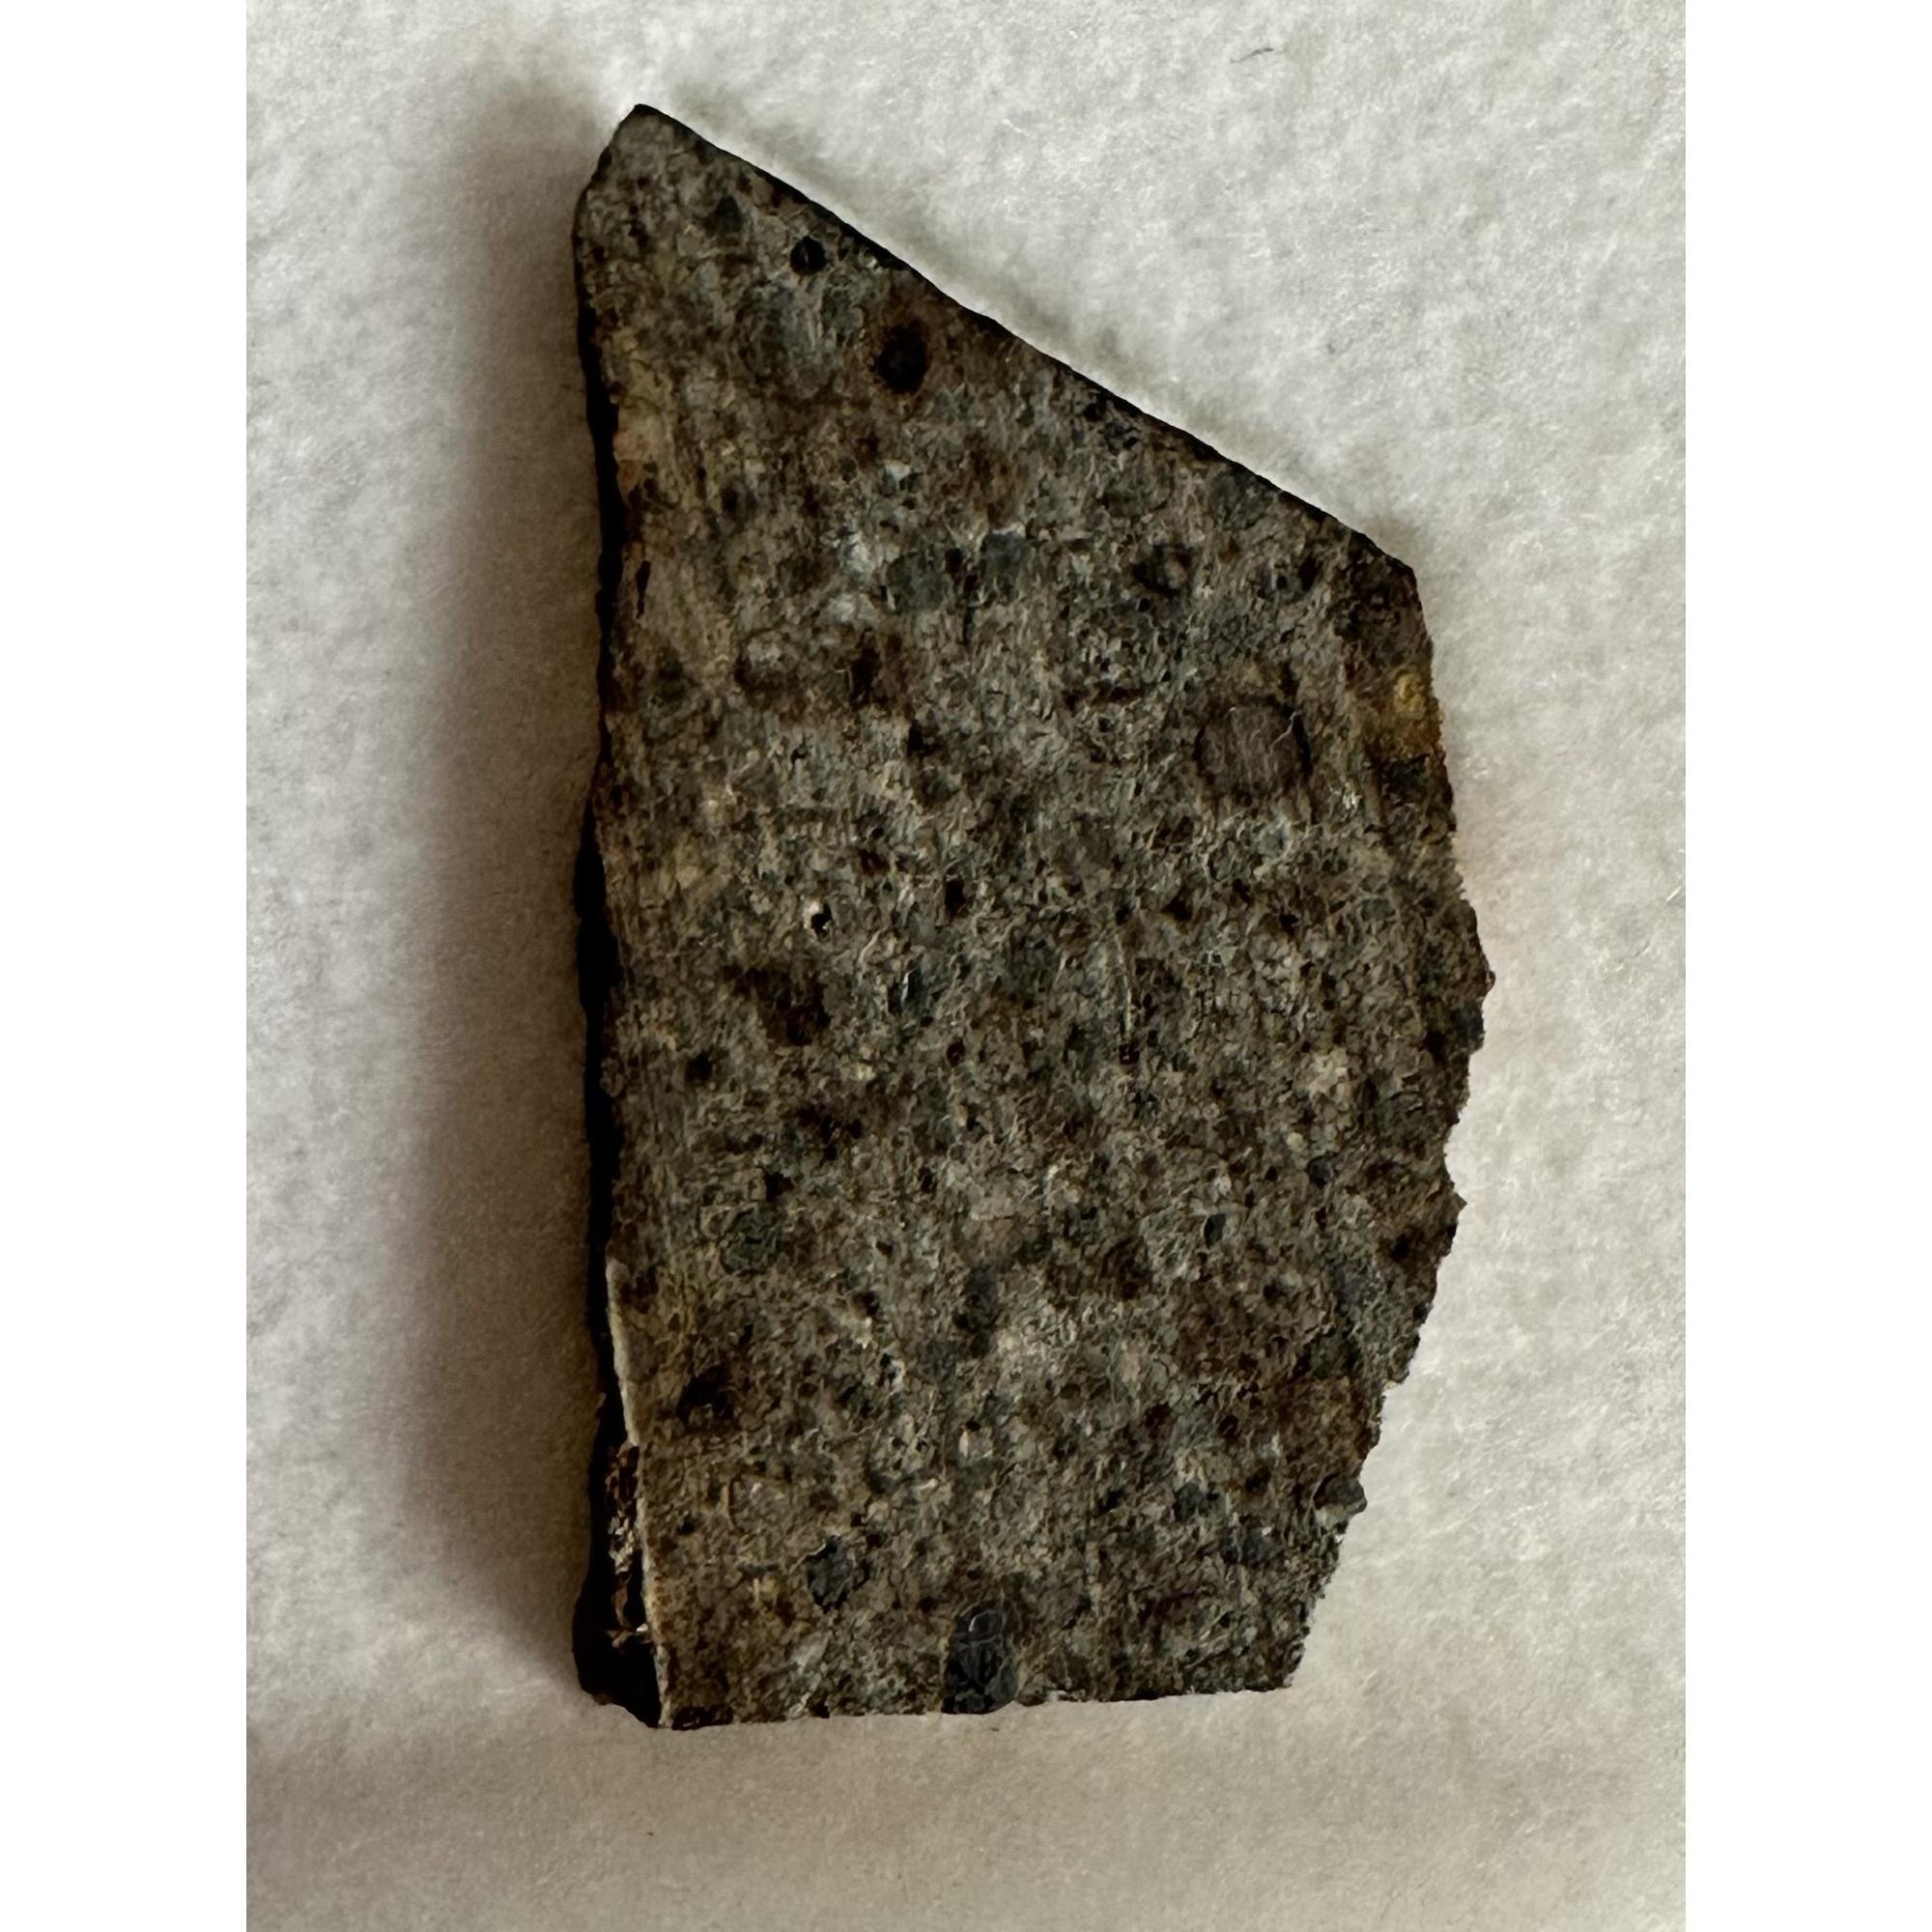 NWA 8602 meteorite, Chondrite LL4 Prehistoric Online